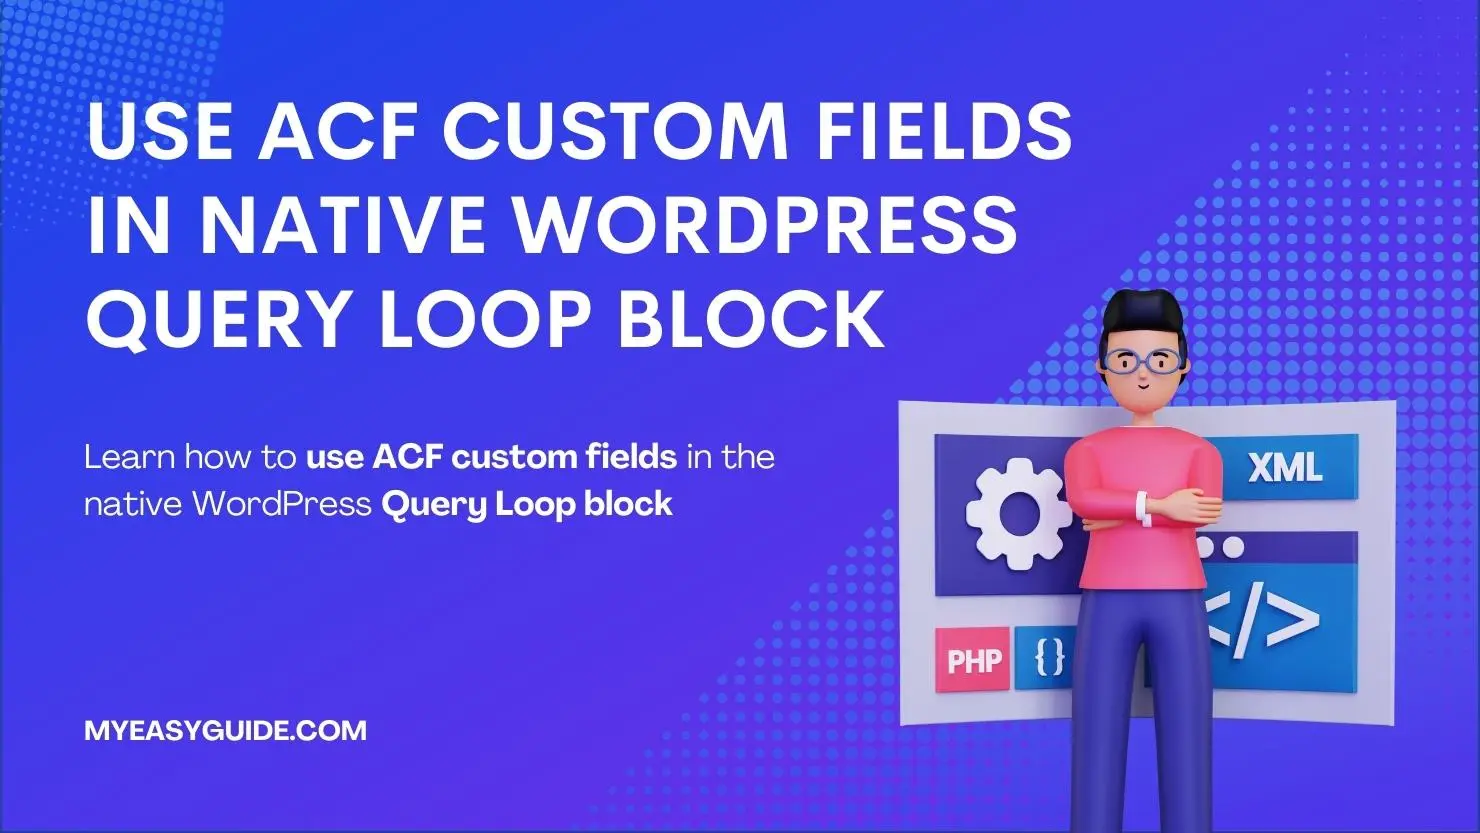 Use ACF custom fields in native WordPress query loop block